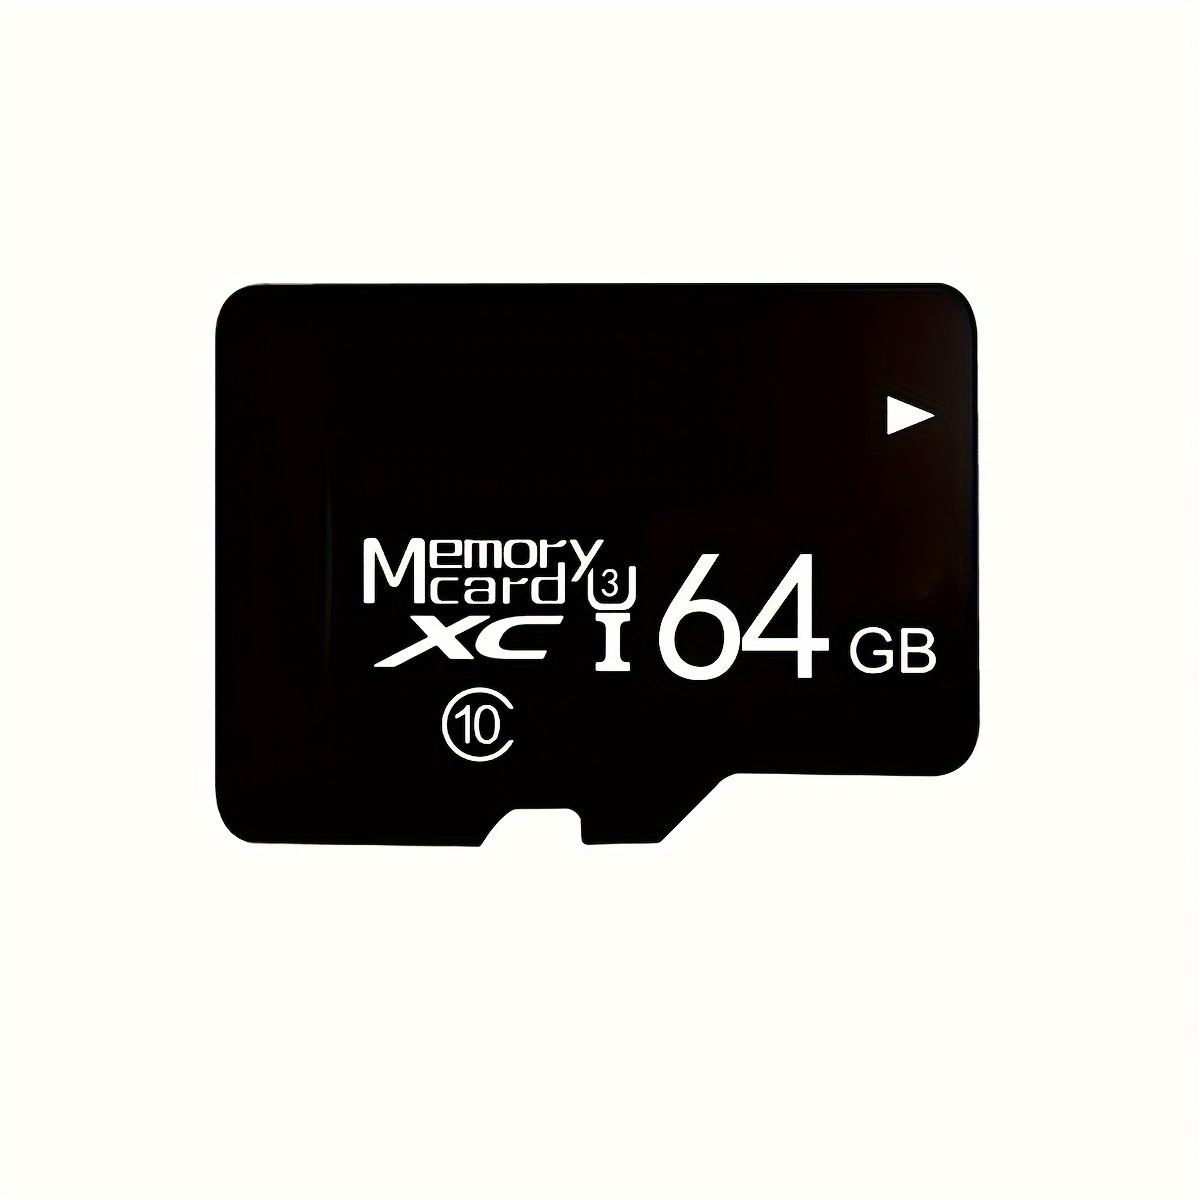 Vimax Carte Mémoire TF Micro SD 4GB - Prix pas cher